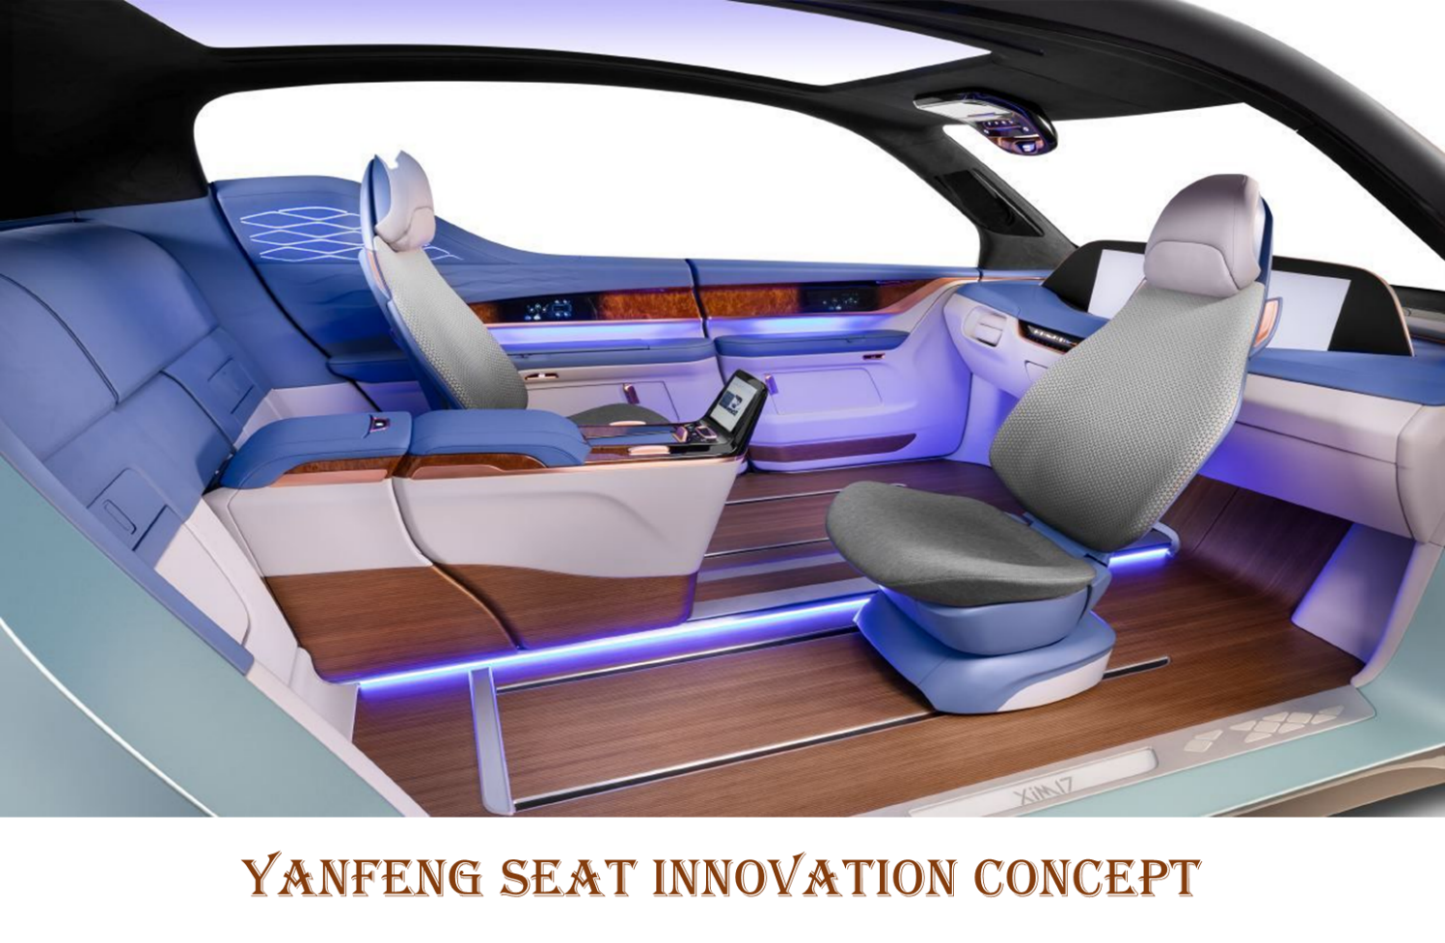 Design HMI Innovations for Automotive Interiors